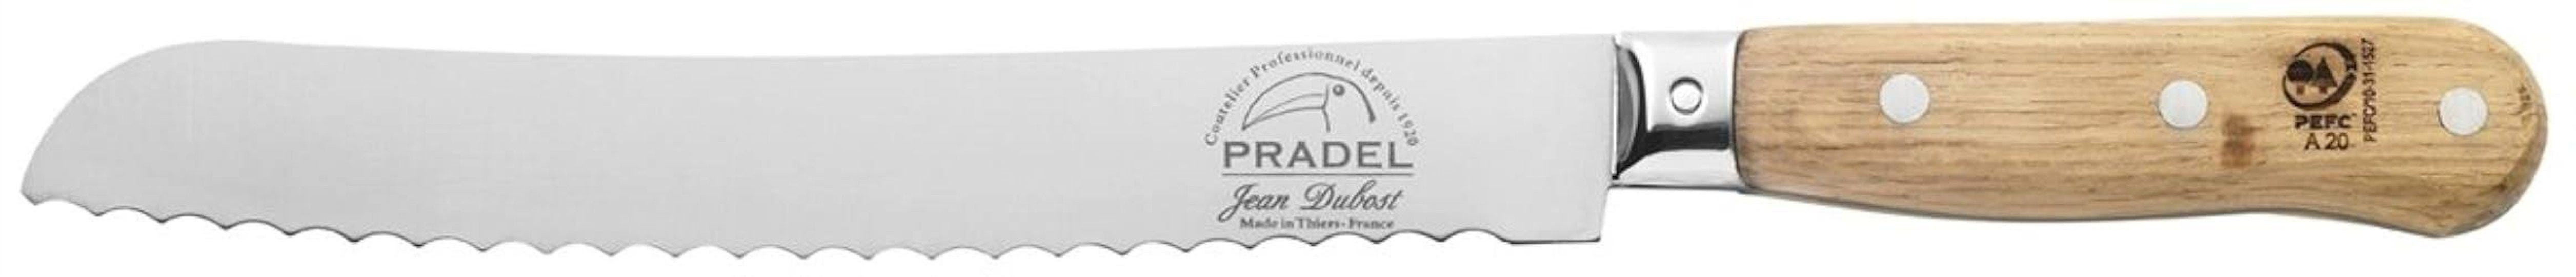 jean-dubost-pradel-1920-bread-knife-1